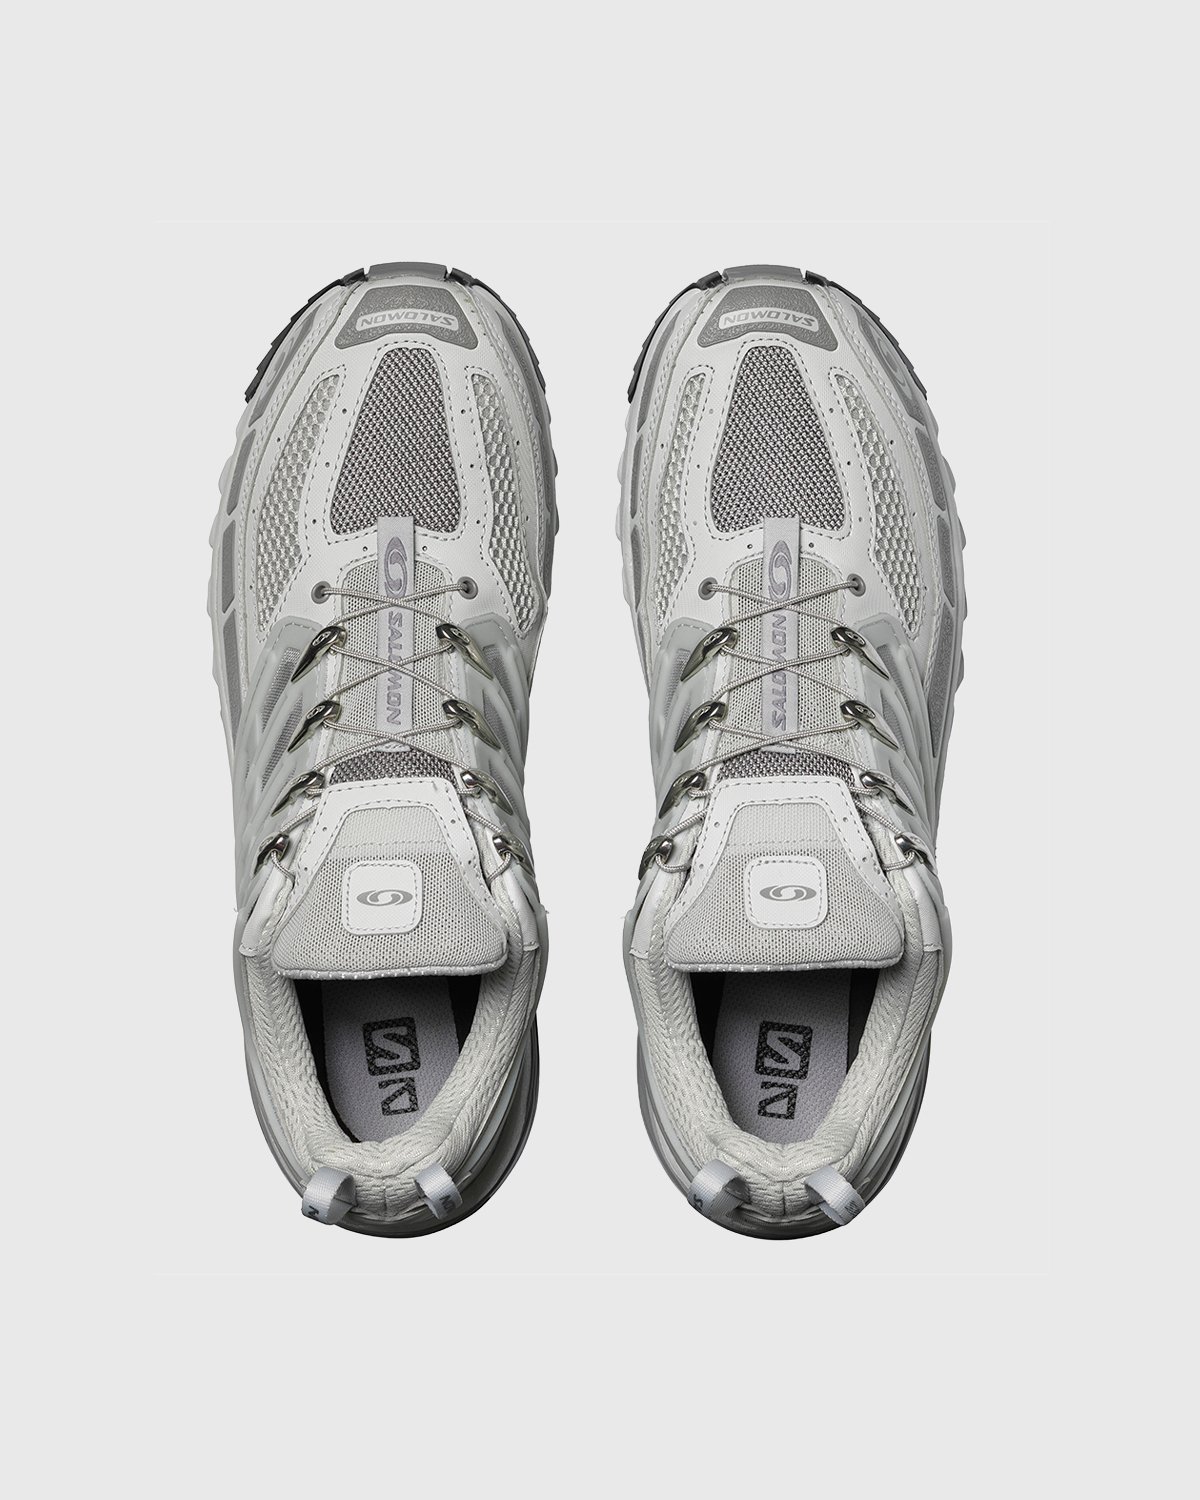 Salomon - ACS Pro Advanced Metal Frost Grey Silver Metallic X - Footwear - Grey - Image 2